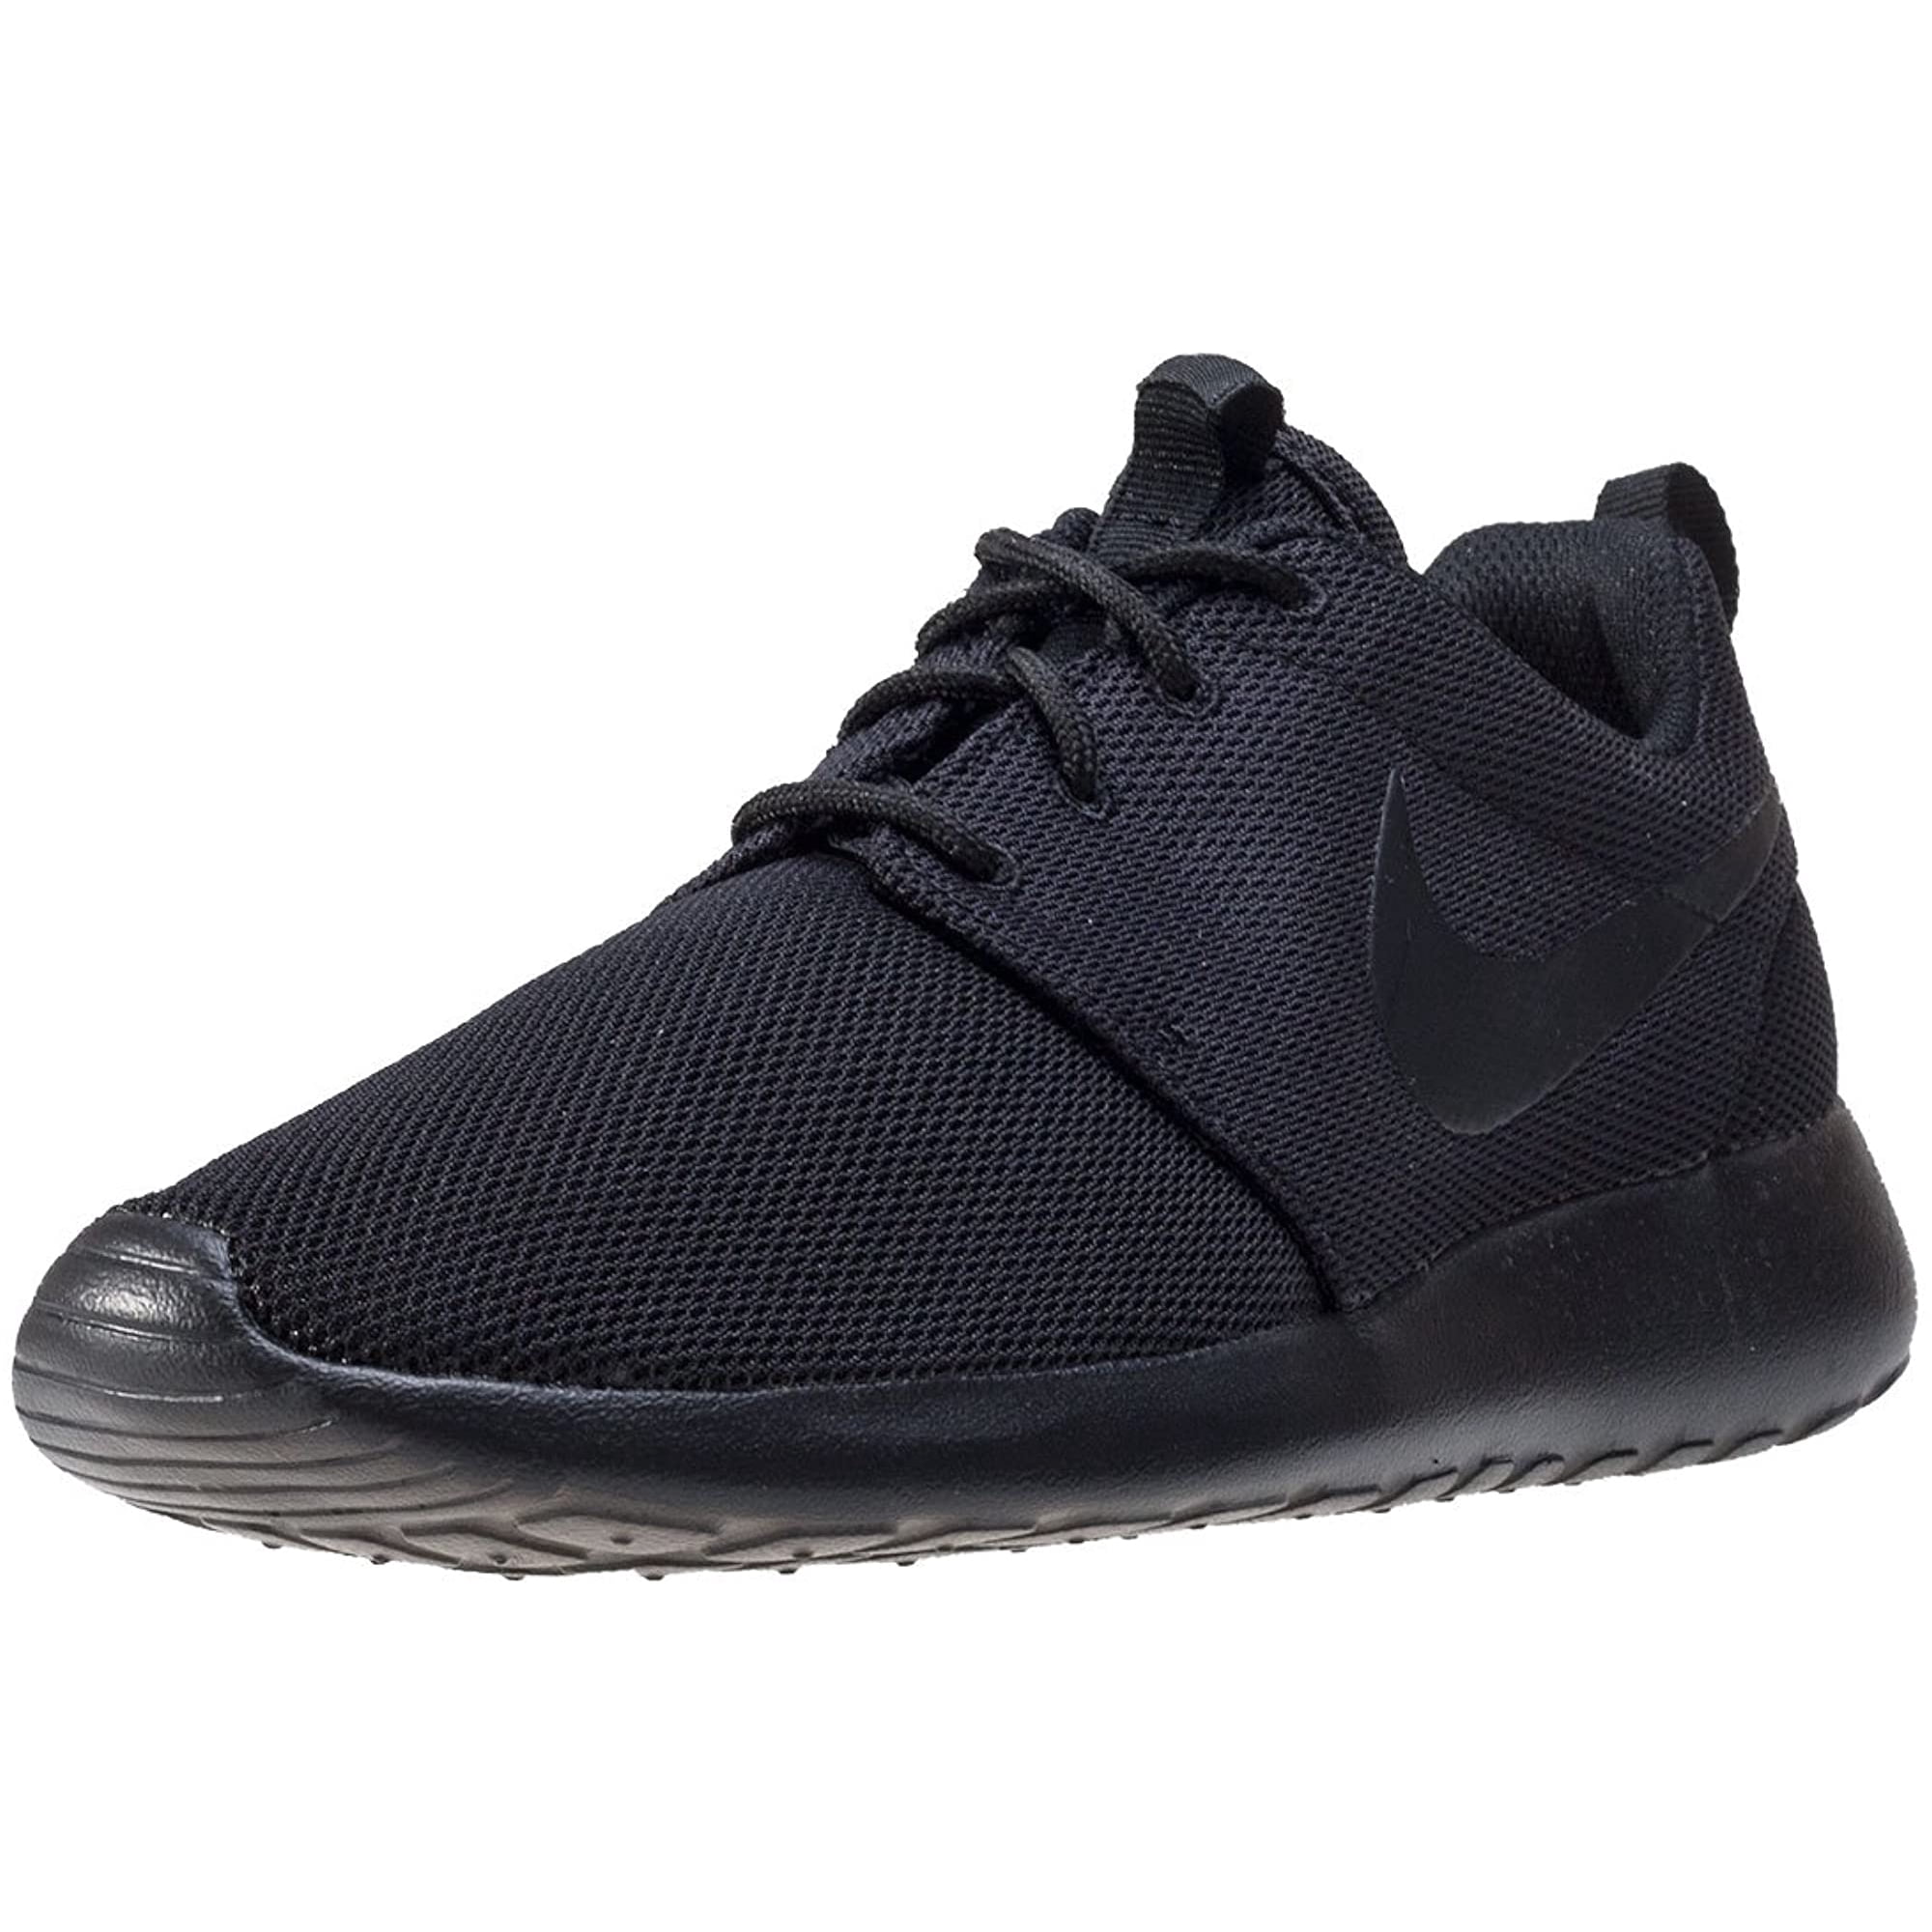 Nike Womens Roshe One Running Shoes 5.5 BM Black/Black/Dark Grey | Walmart